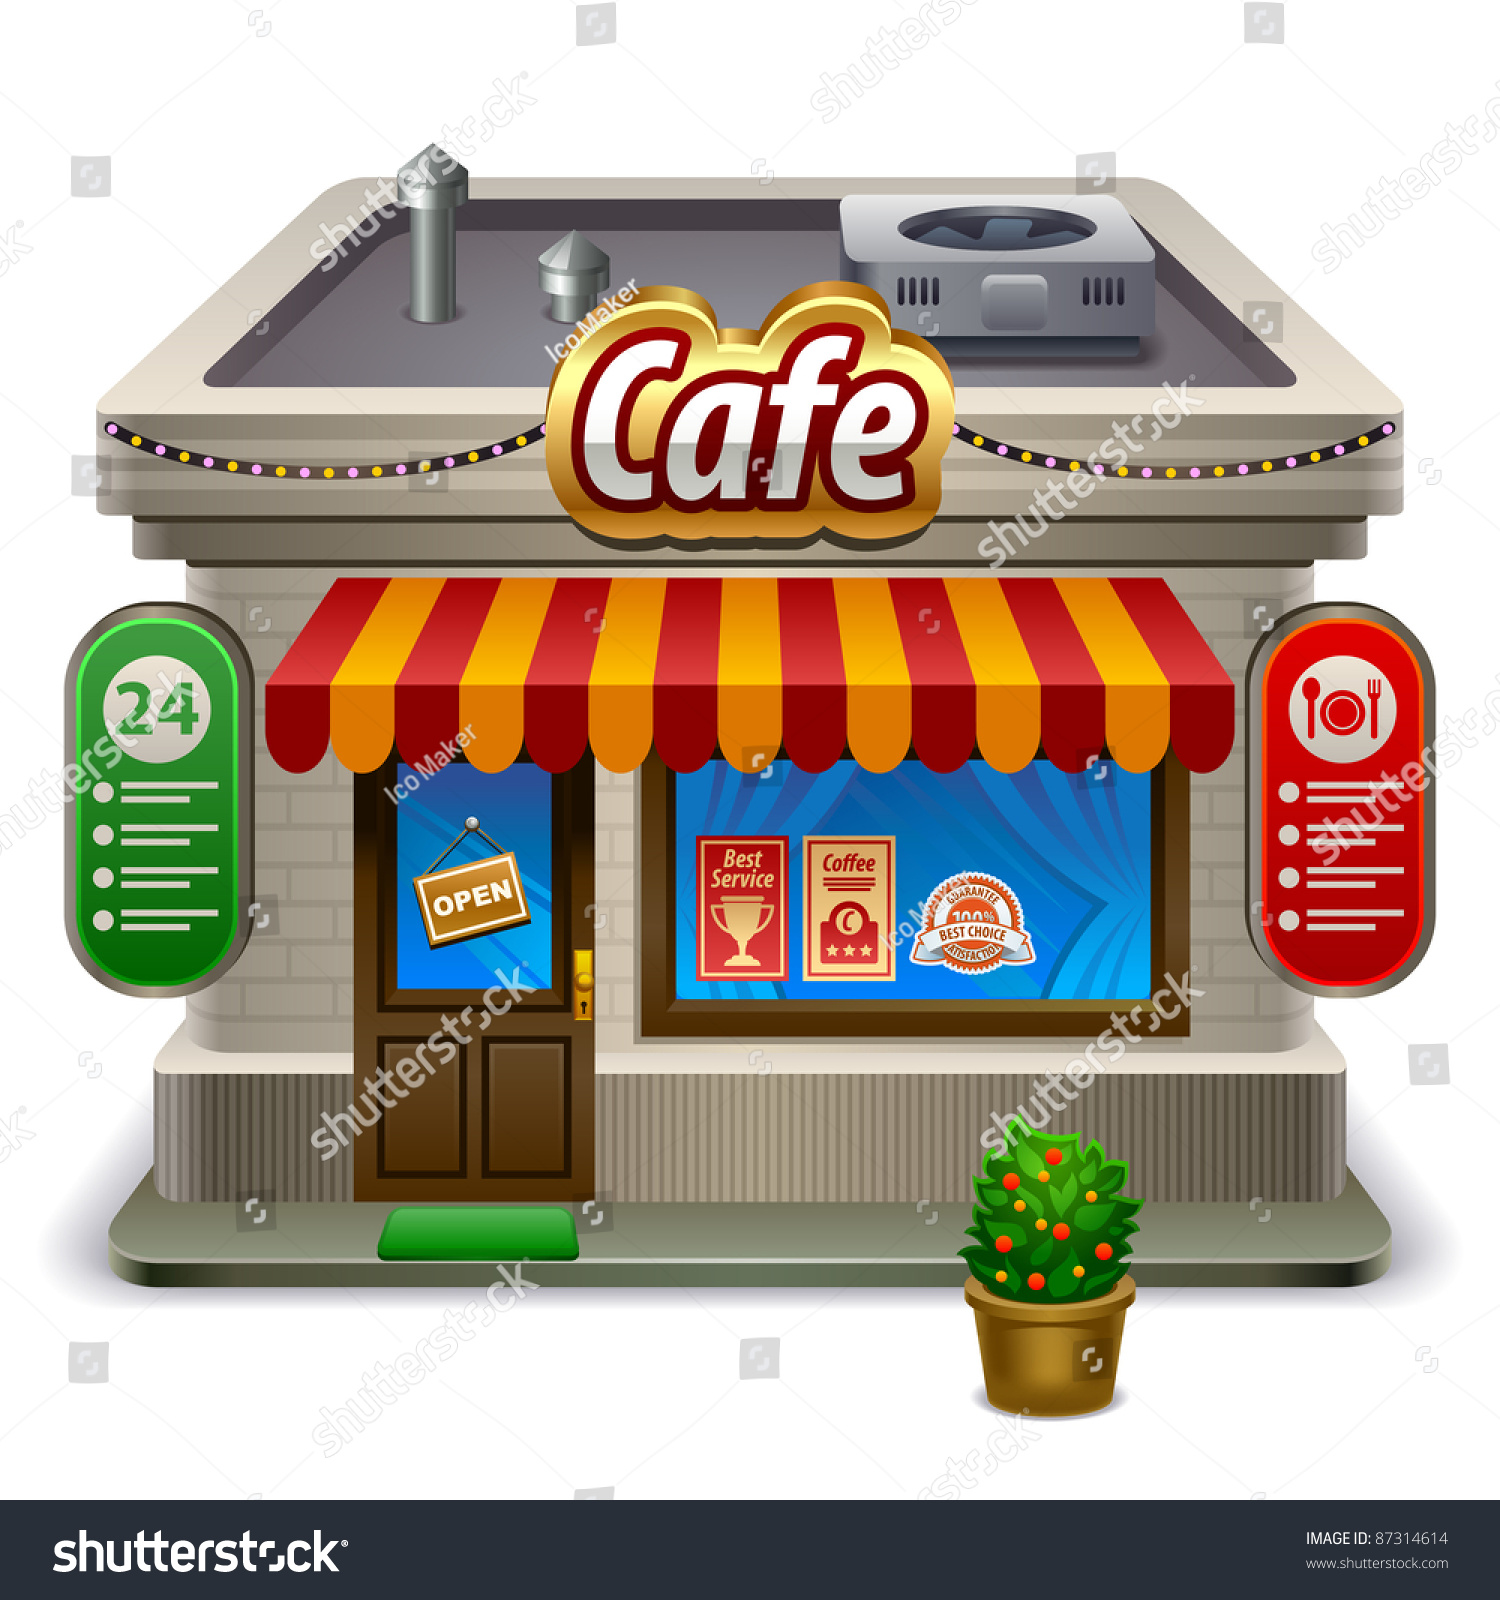 cafe clipart vector - photo #50